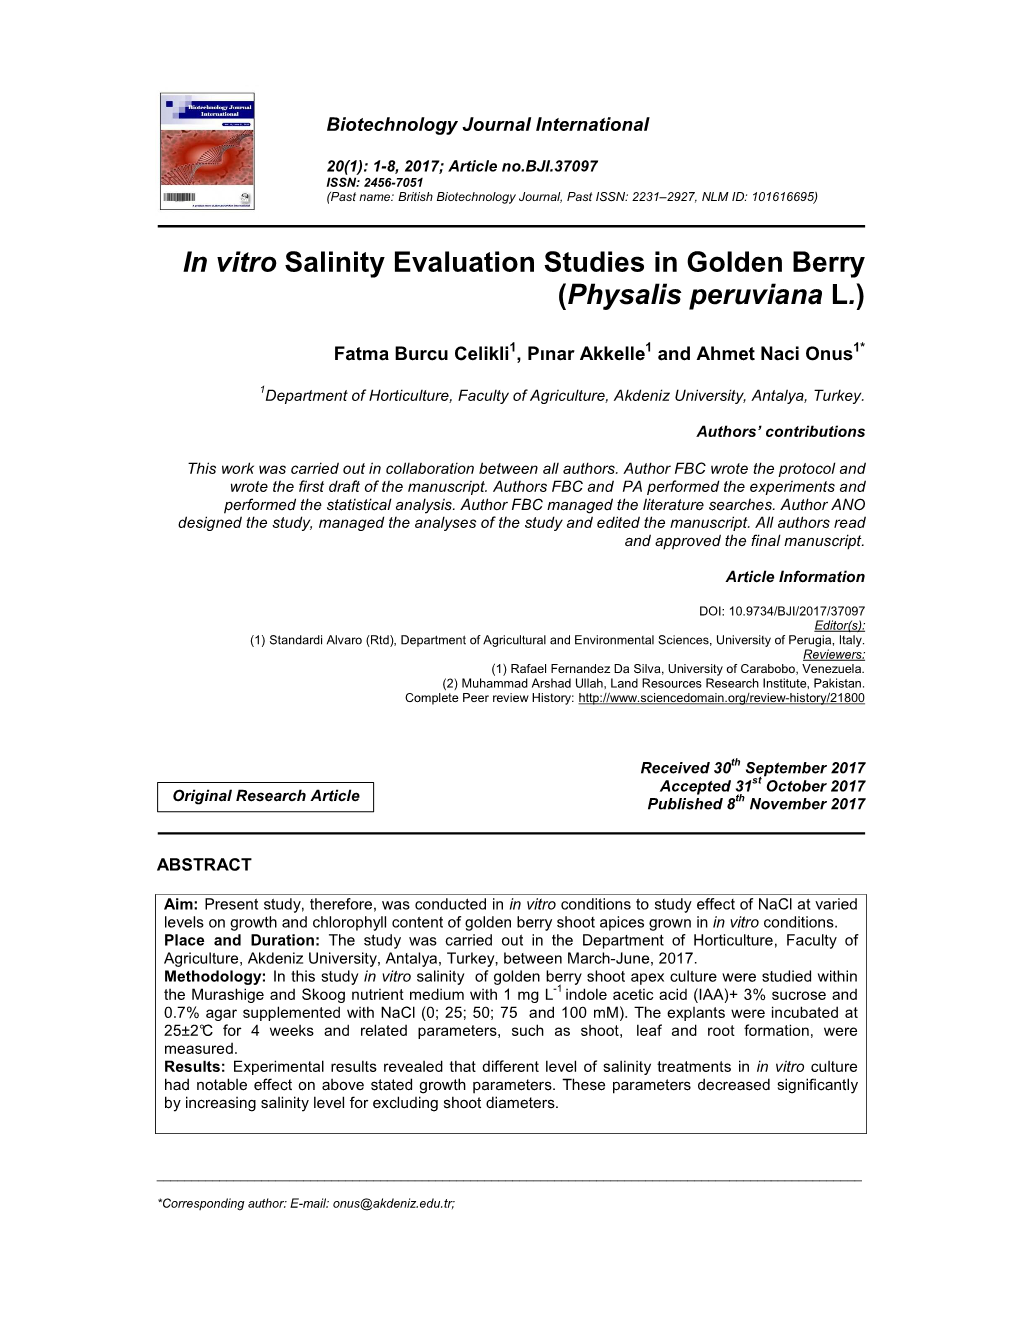 In Vitro Salinity Evaluation Studies in Golden Berry (Physalis Peruviana L.)